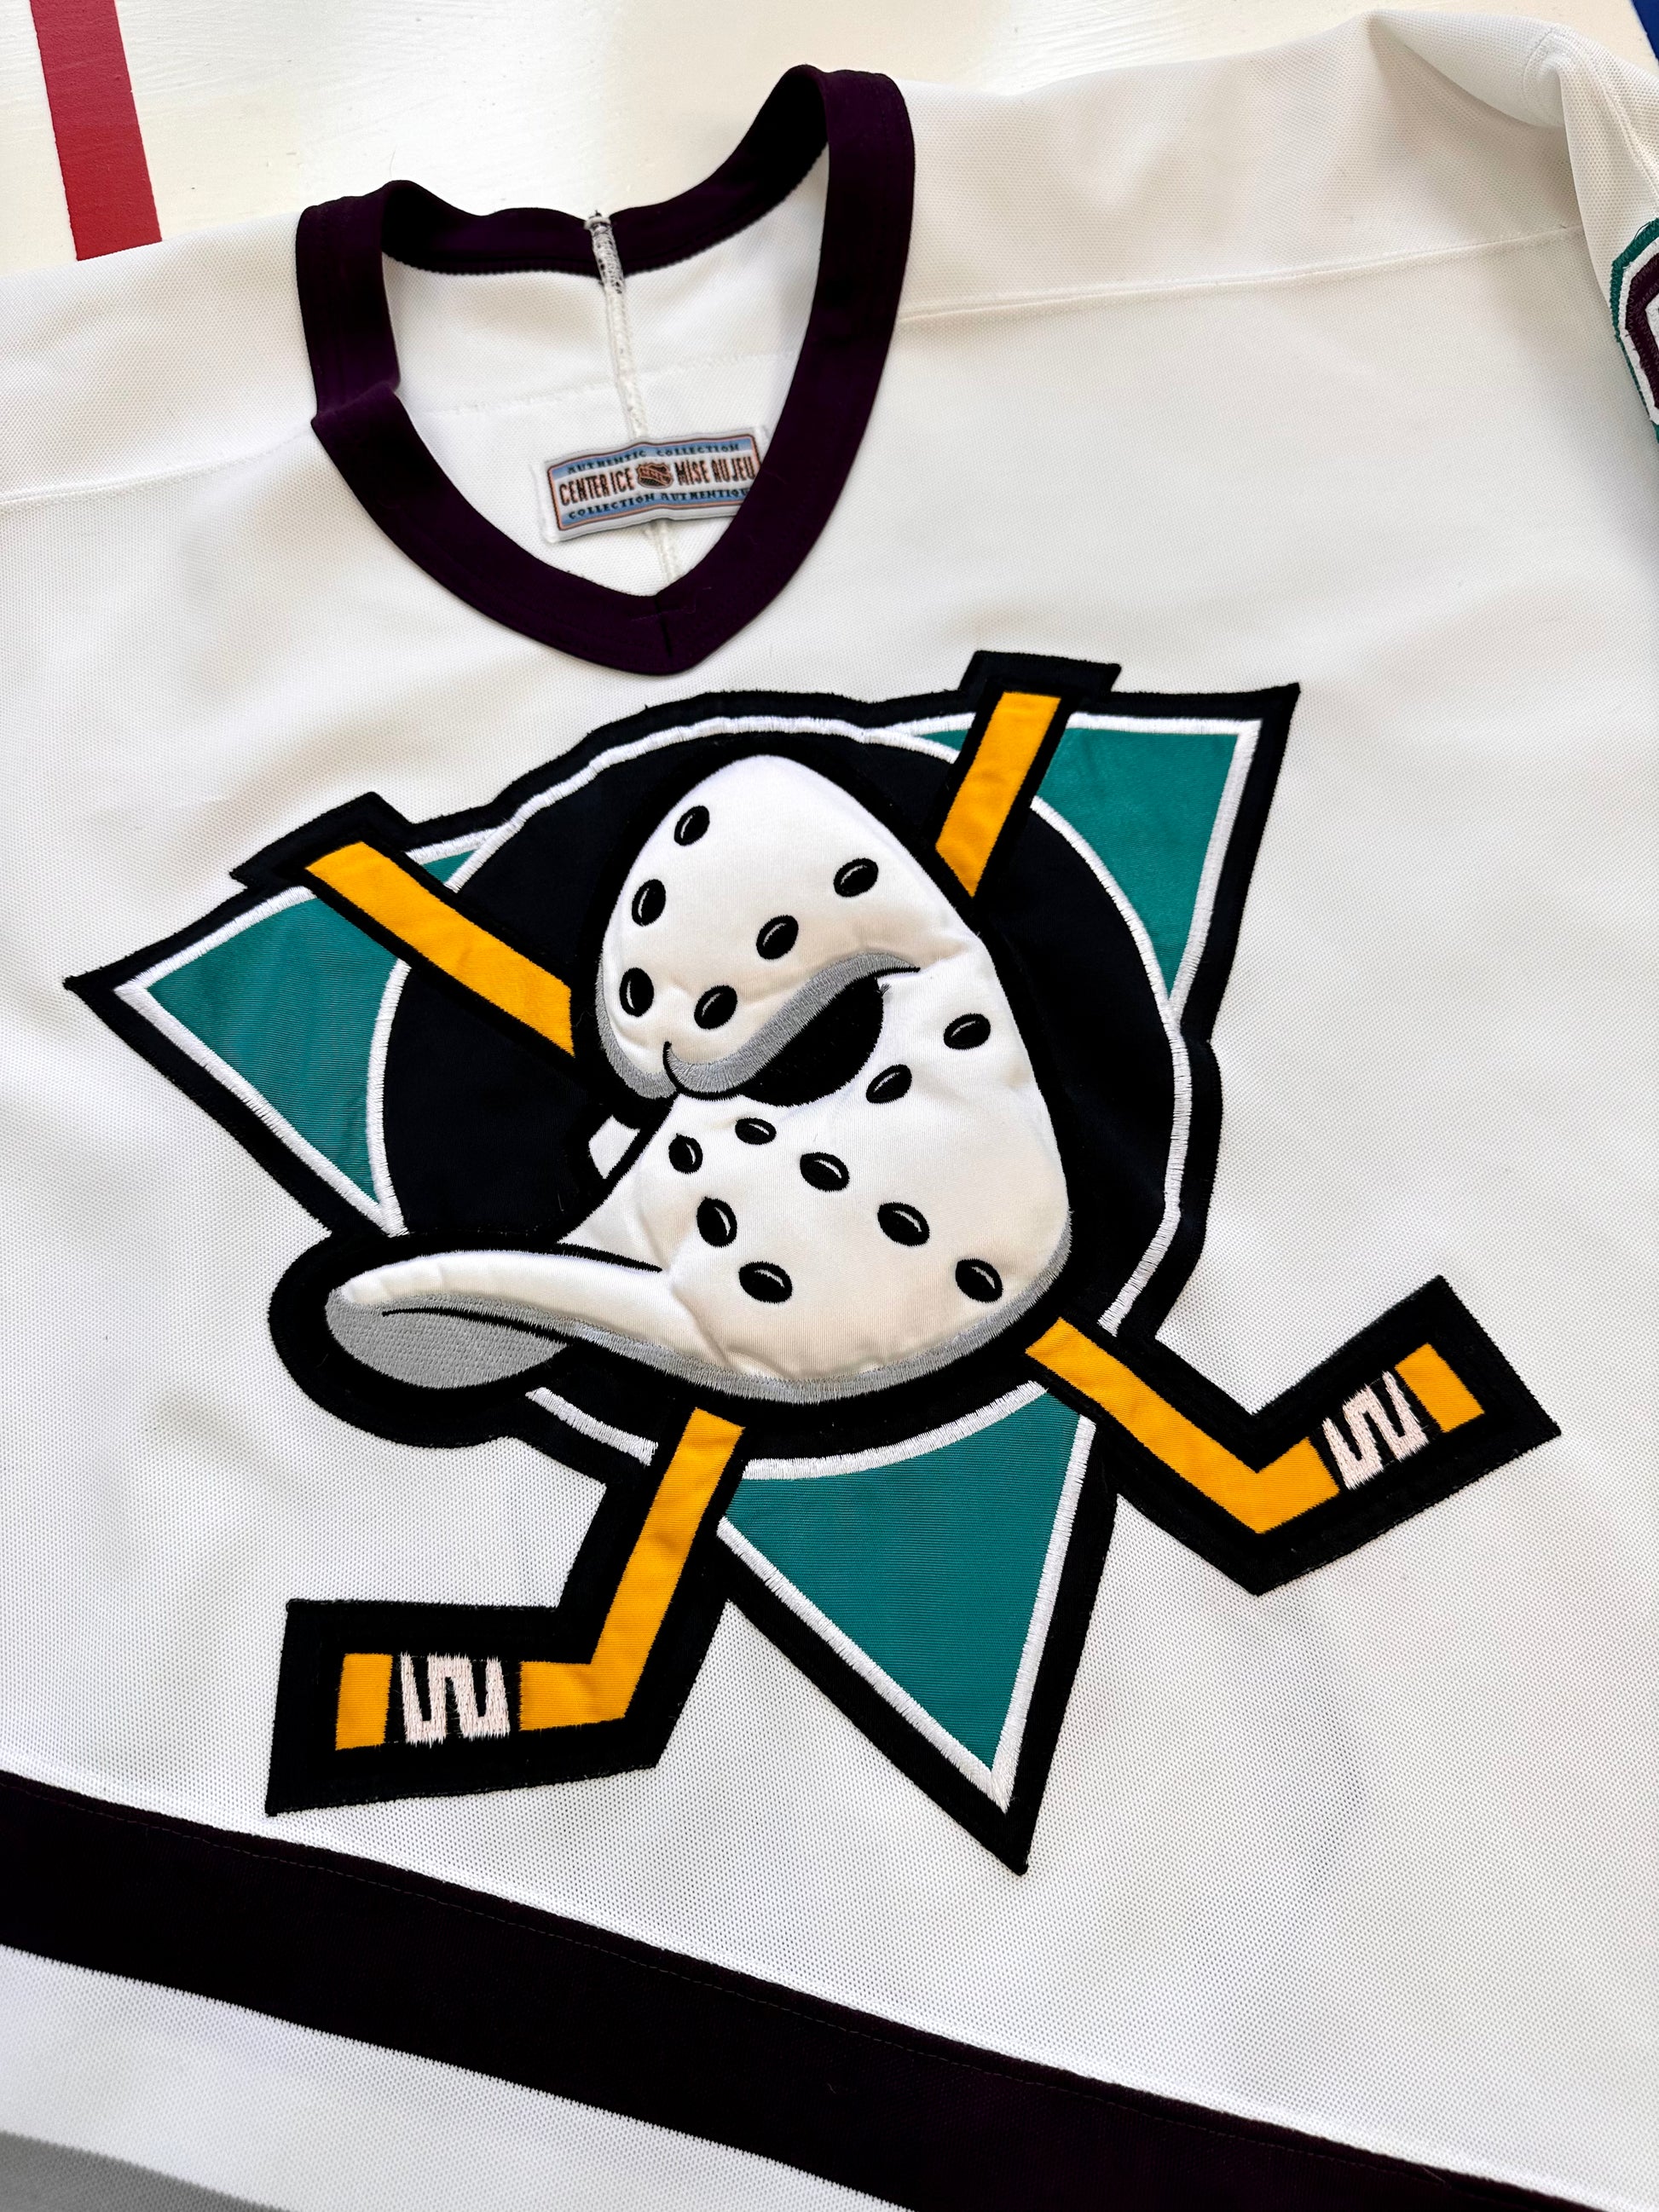 Anaheim Mighty Ducks 1996 Teemu Selanne NHL Hockey Jersey (52/XL) – Grail  Snipes